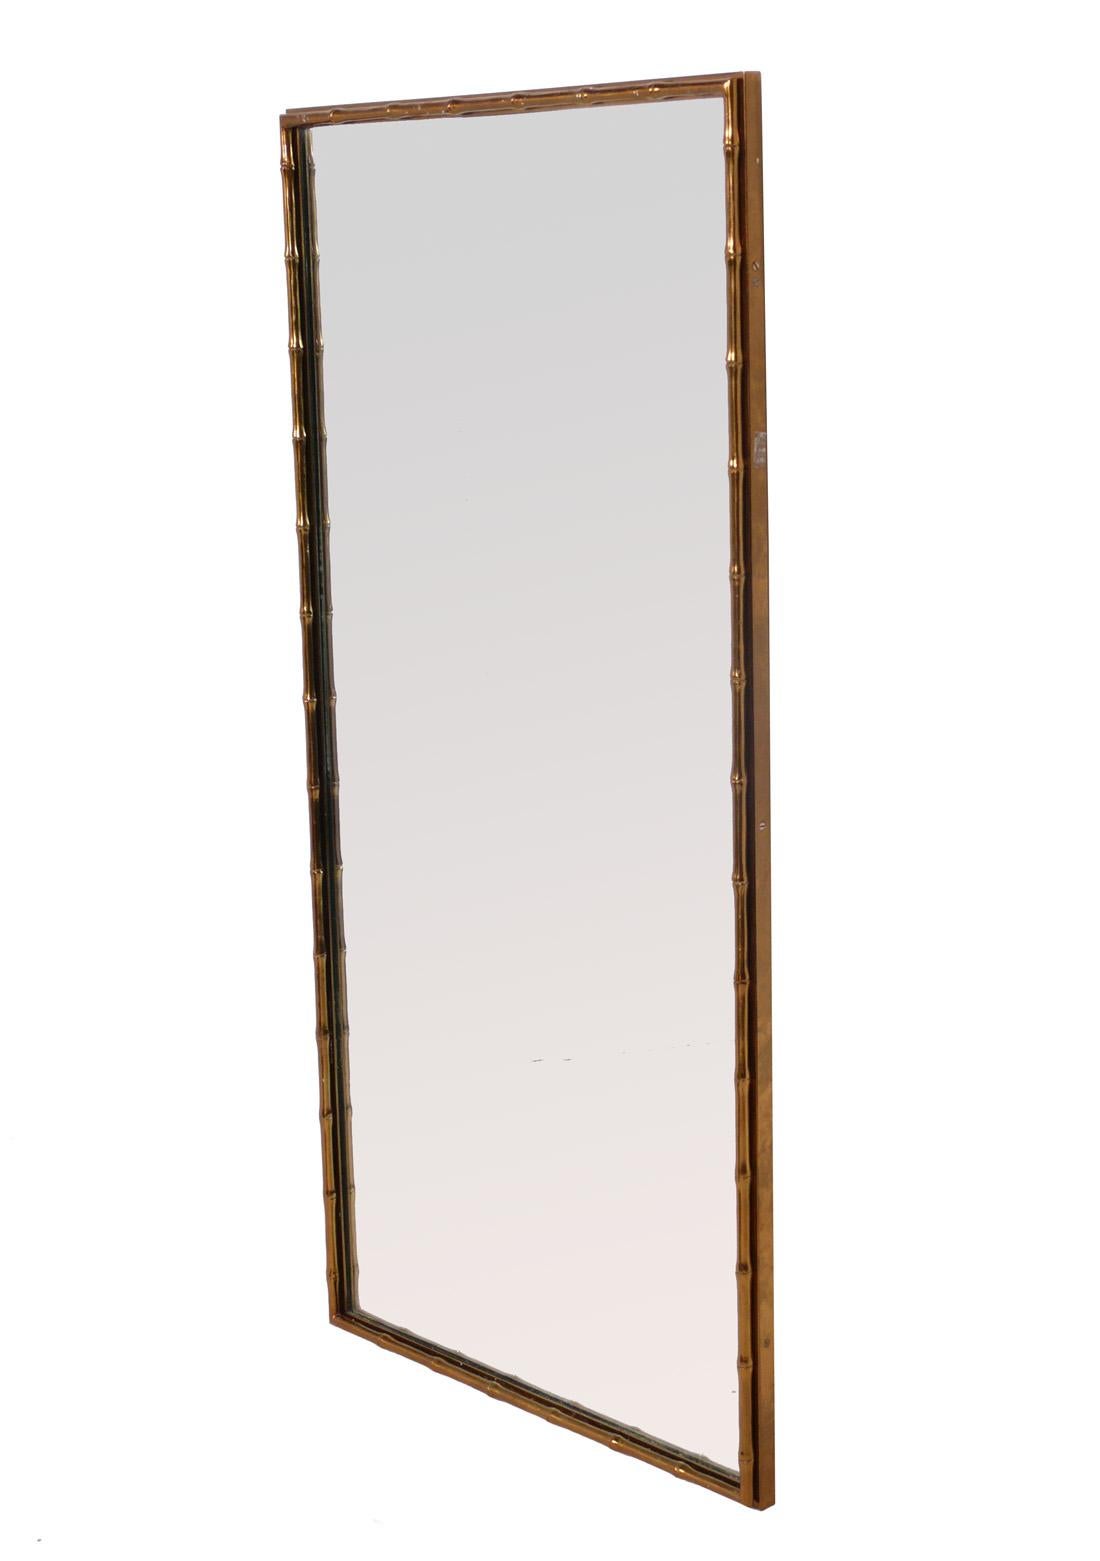 Glamorous brass faux bamboo mirror, American, circa 1960s. It measures an impressive 48